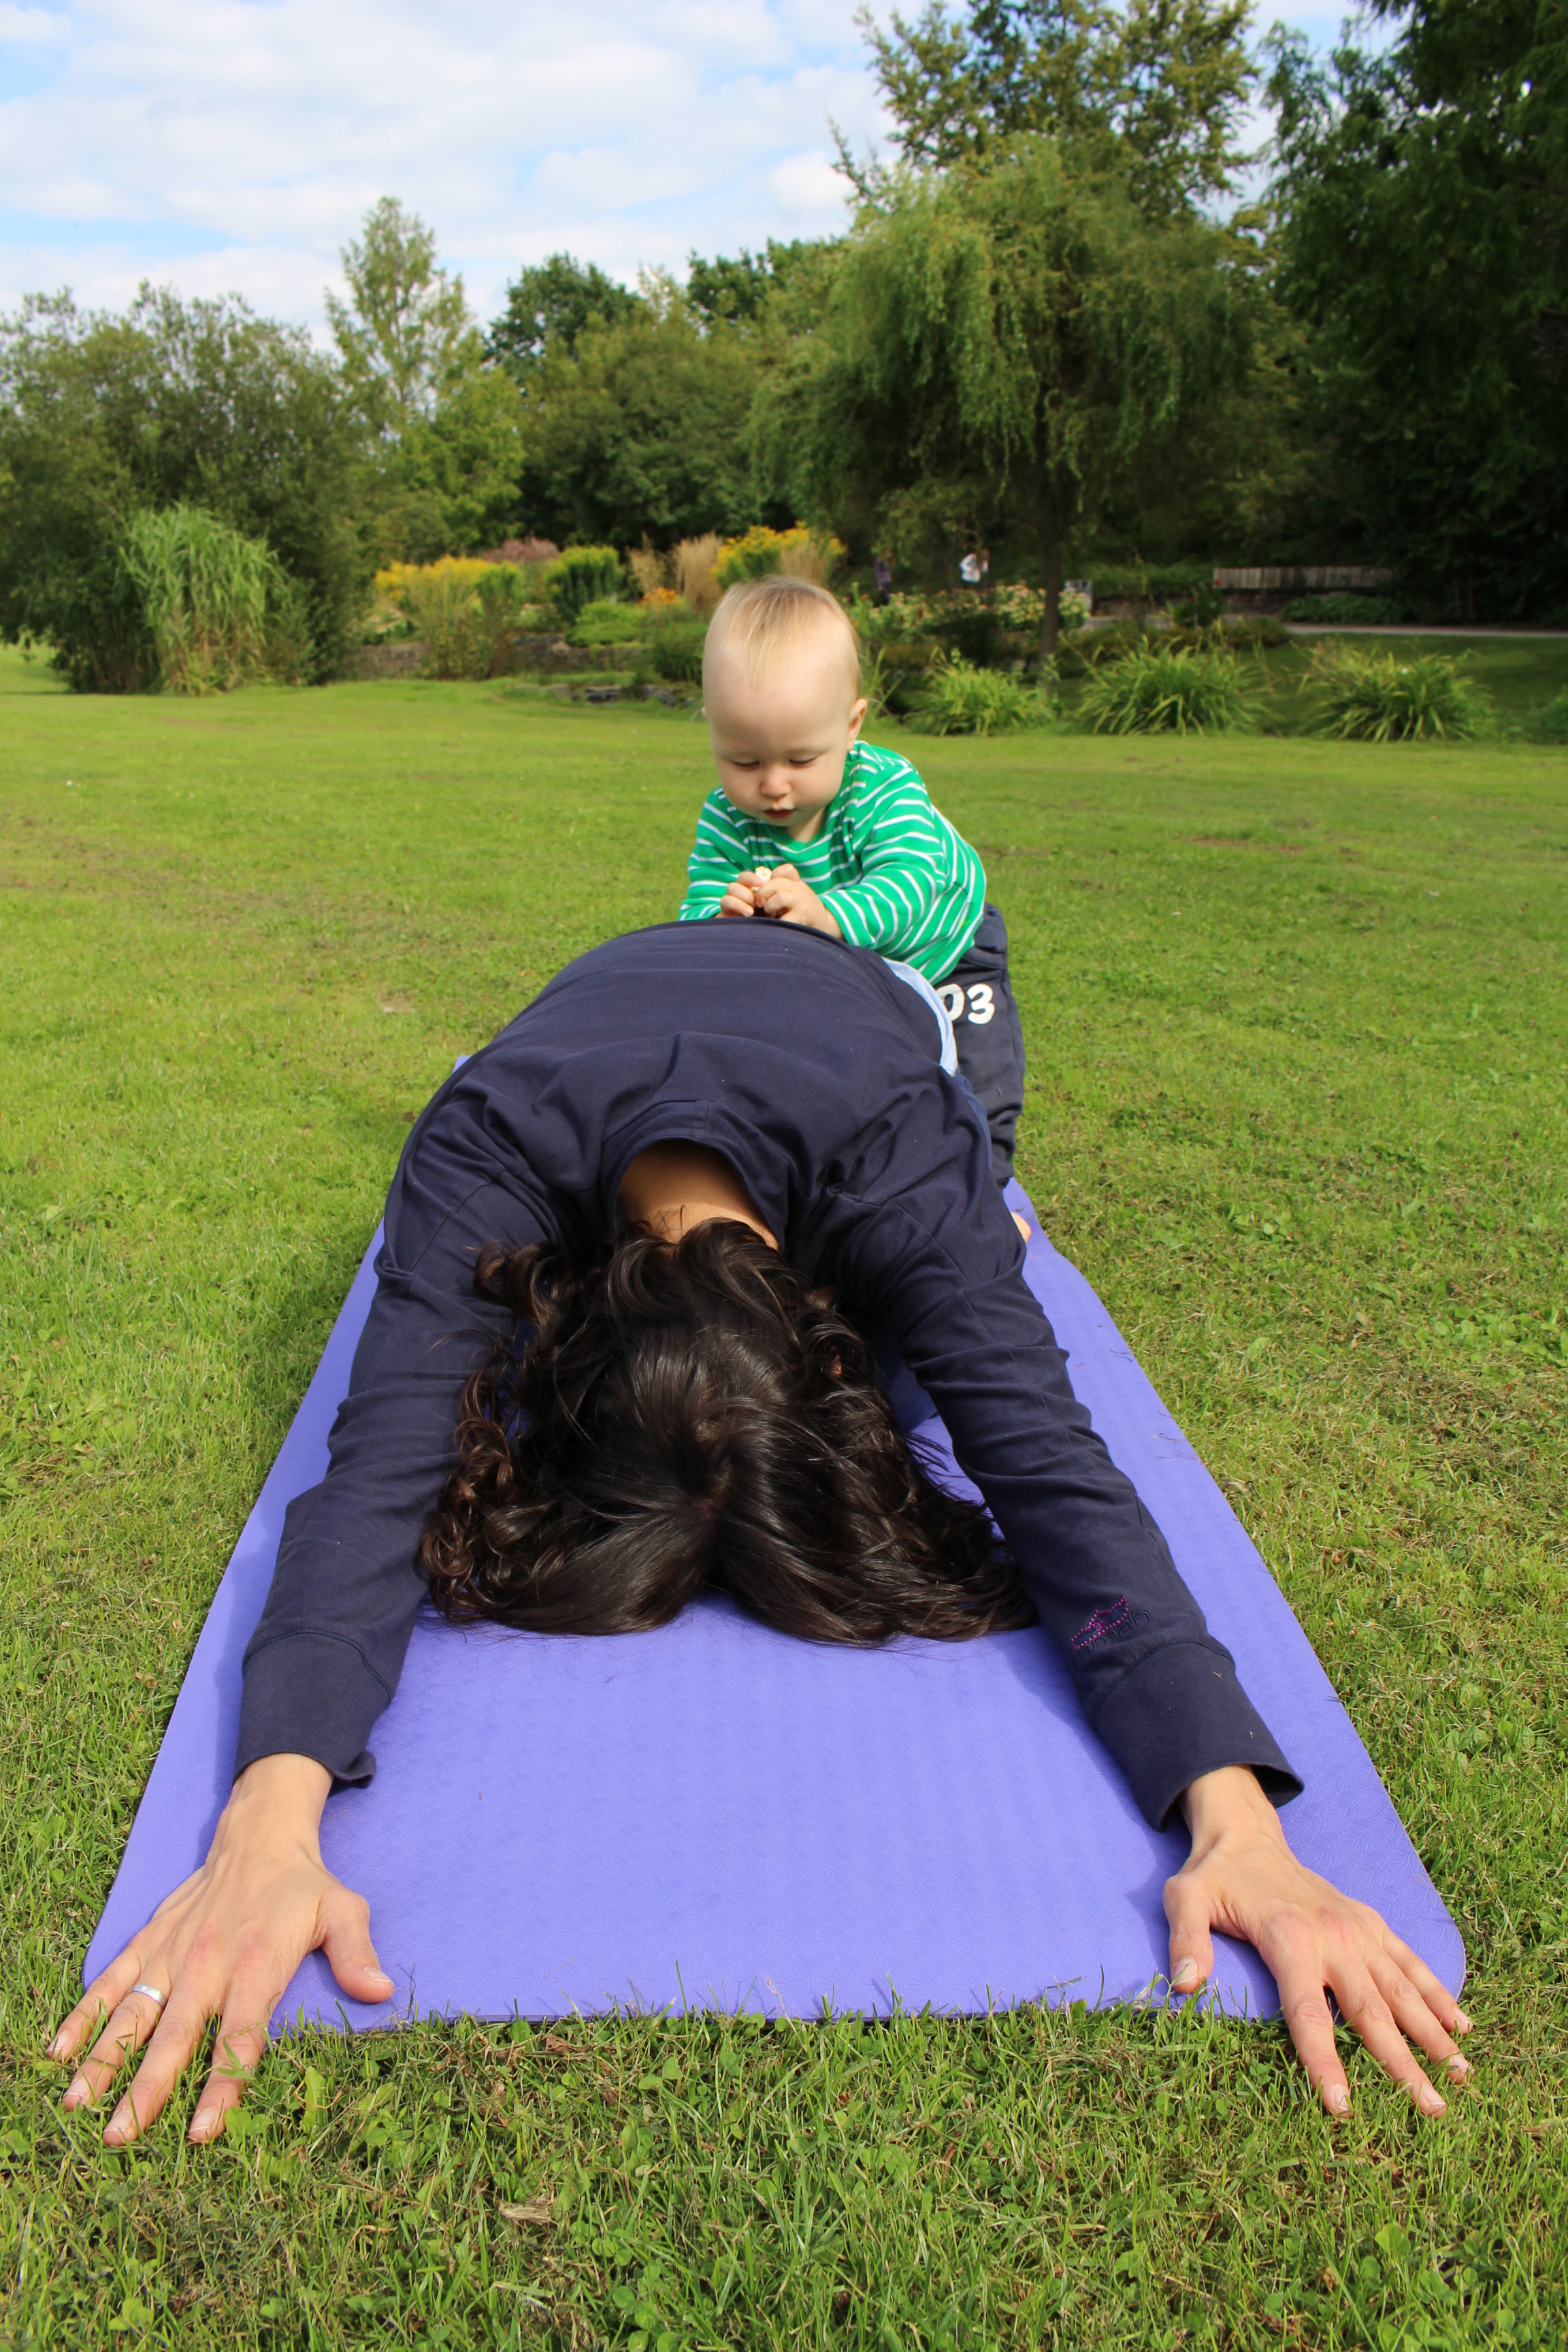 Yoga-Übung Stellung des Kindes